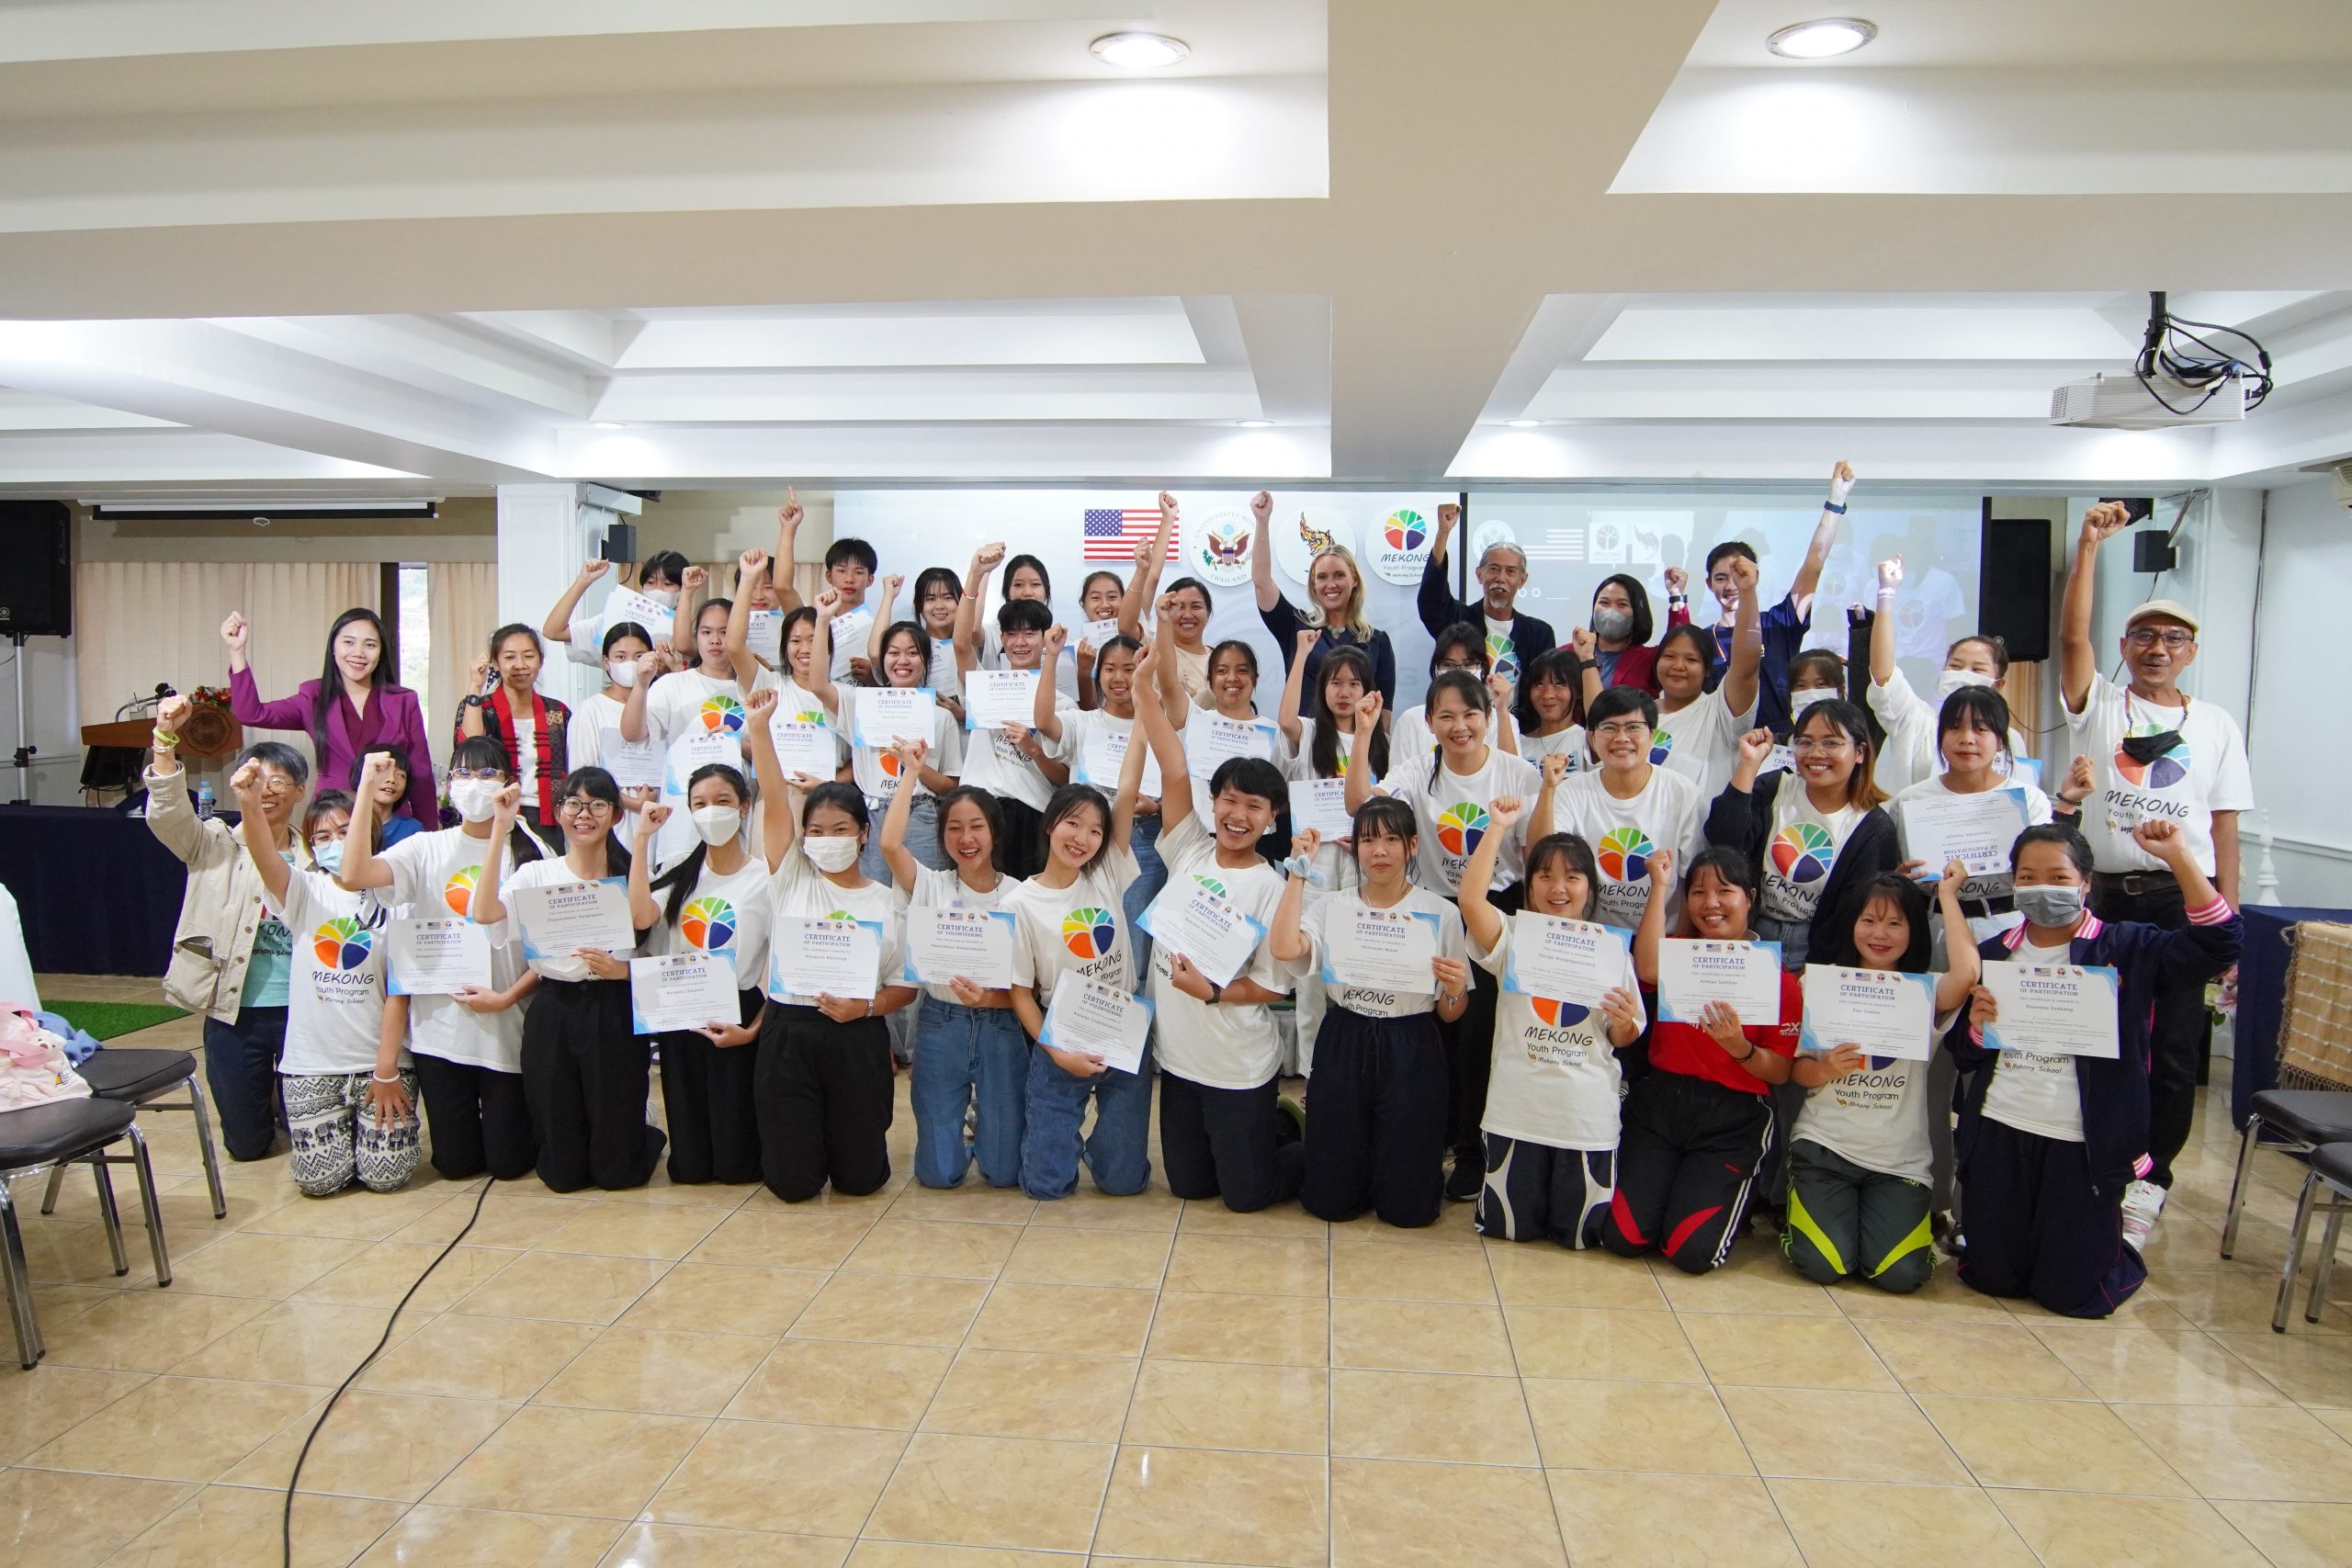 Chiang Rai Mekong Youth “Project-Based Learning” Showcase